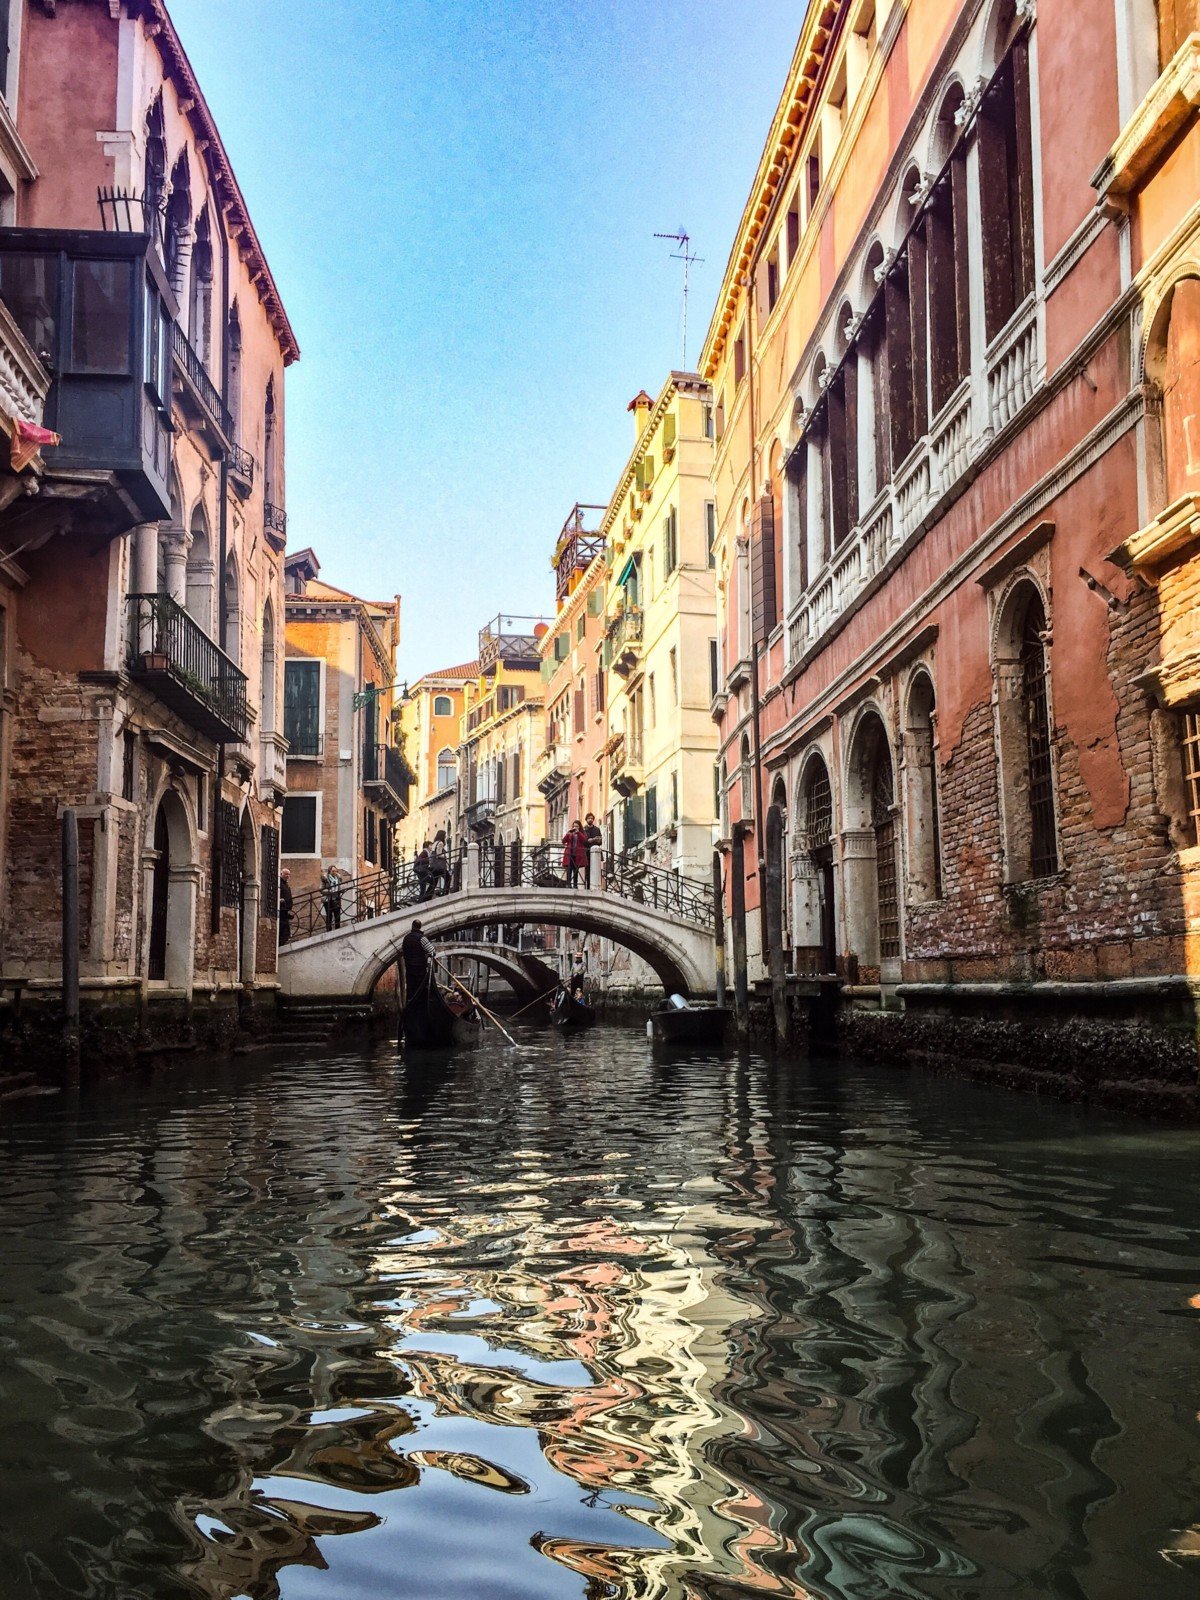 A Venice river cruise